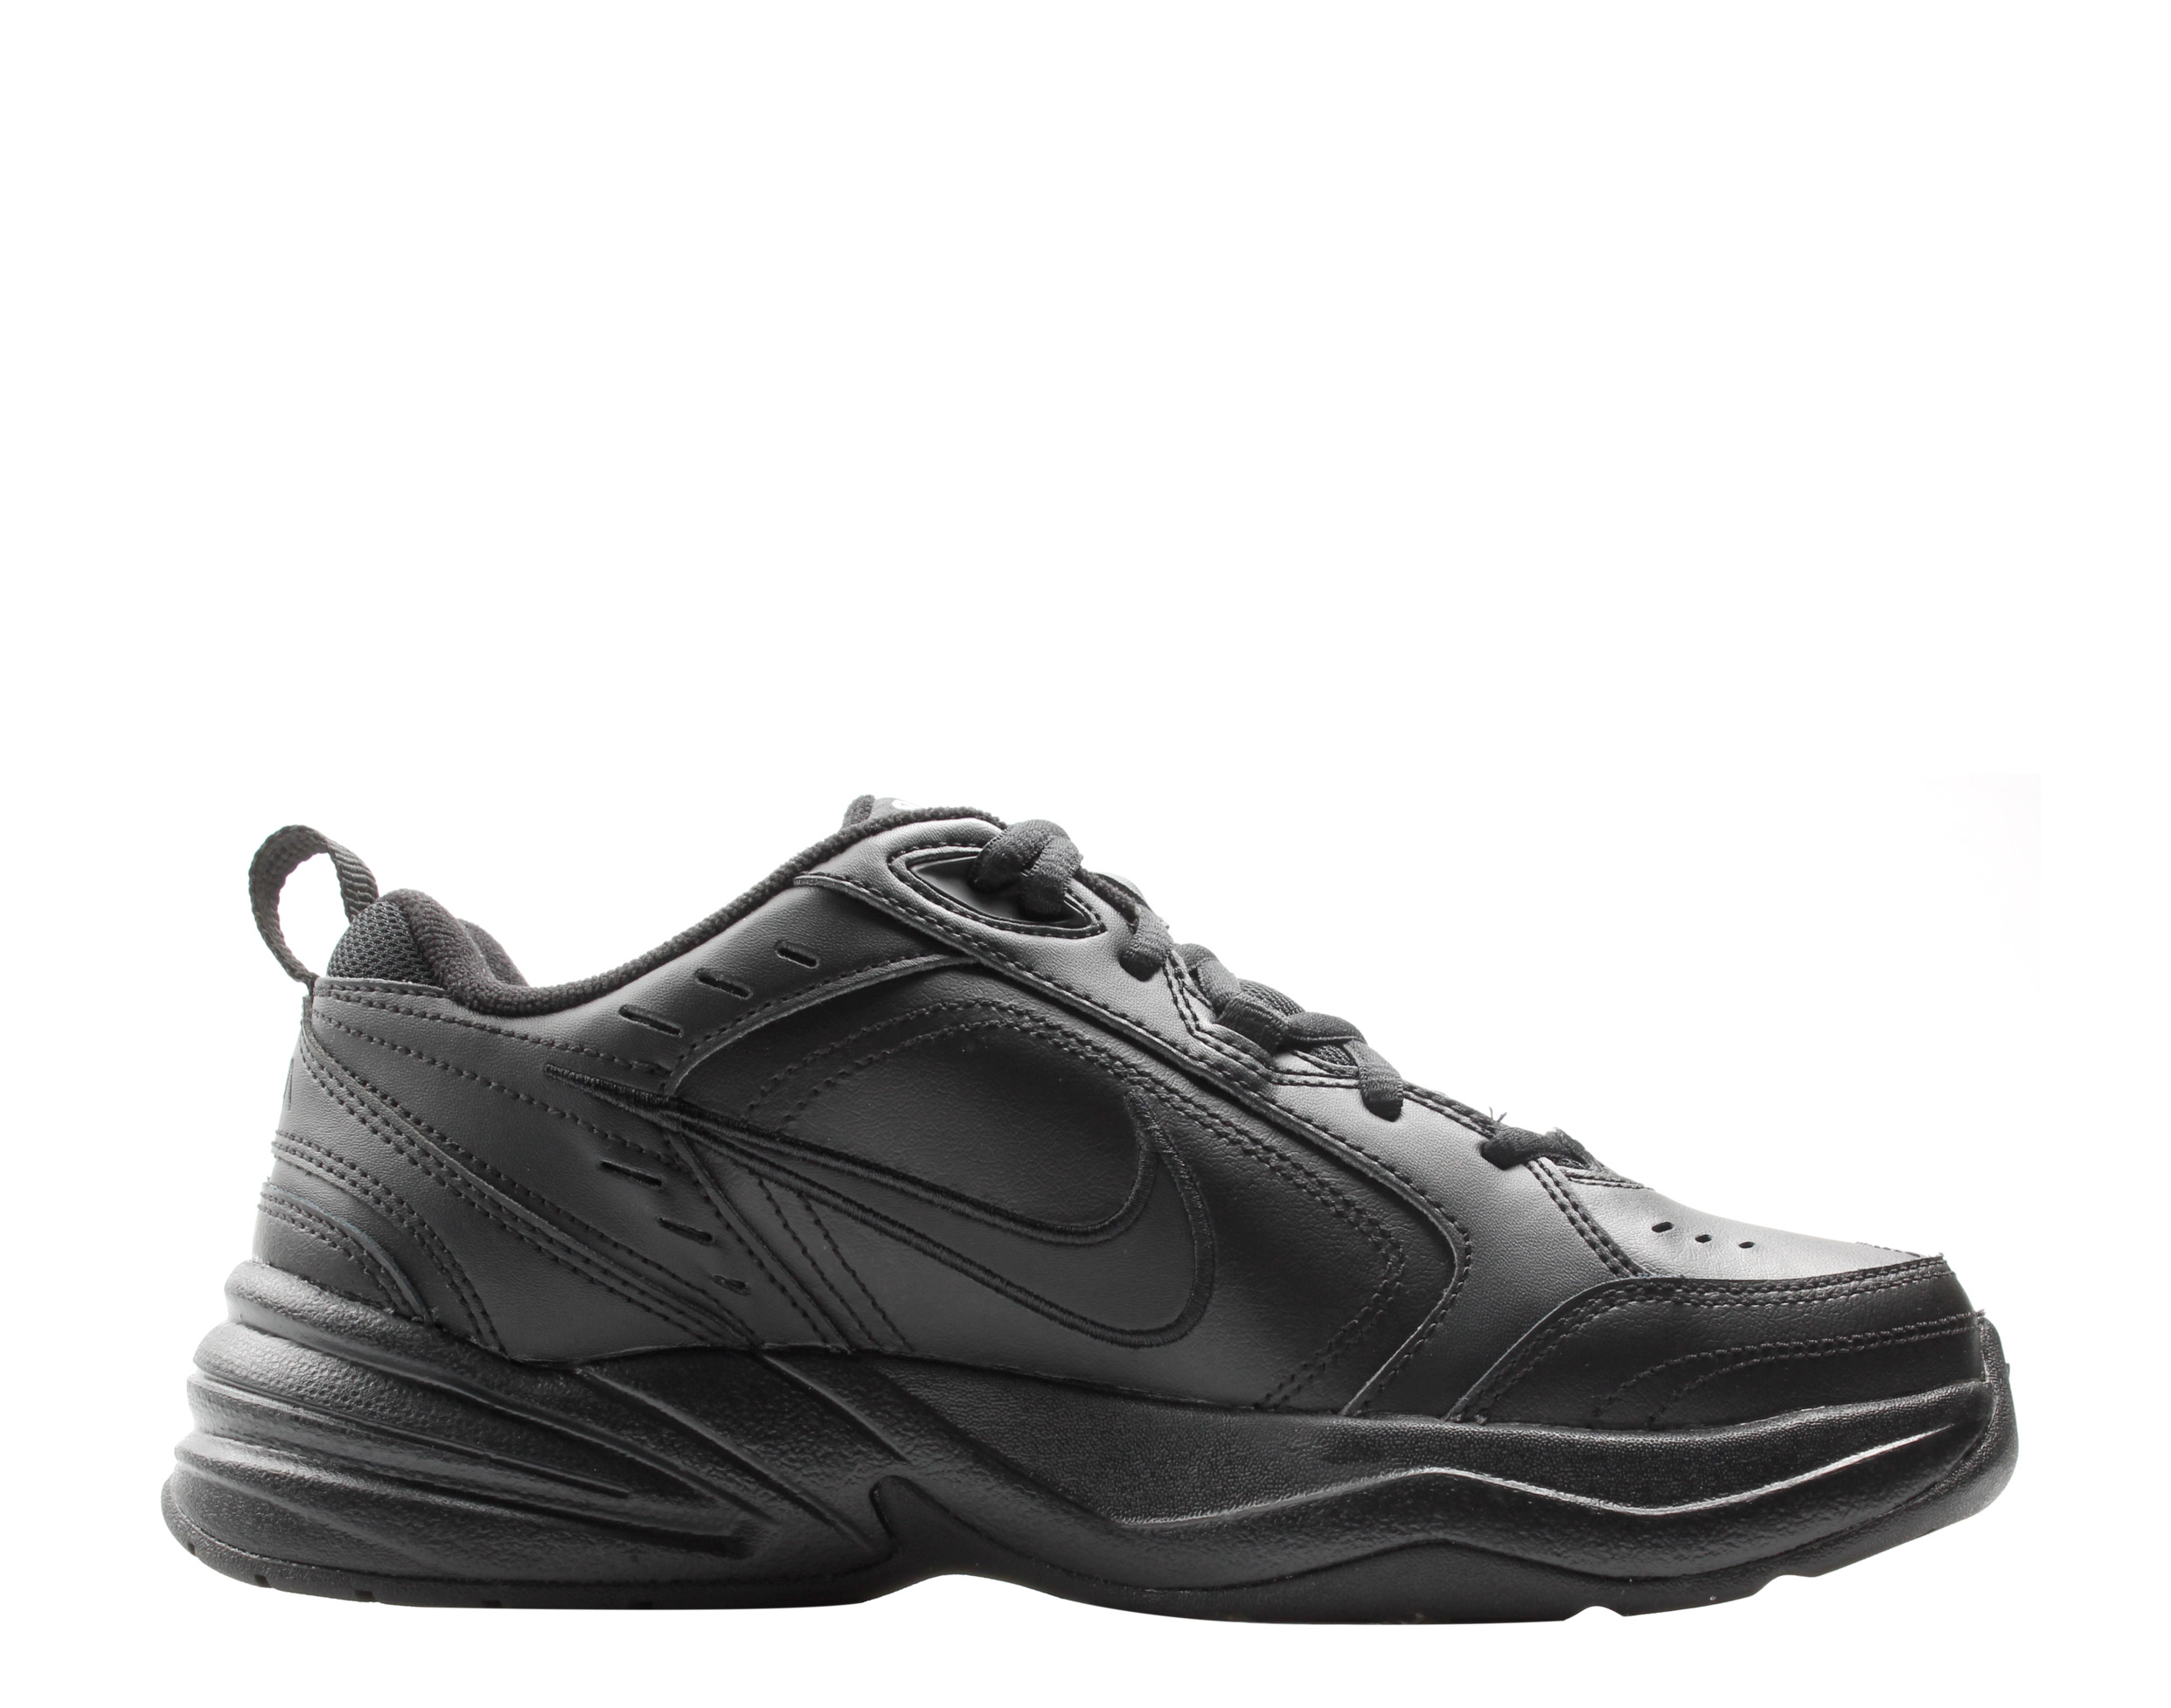 Nike Air Monach IV Men's Cross Training Shoes Size 9M - image 2 of 6